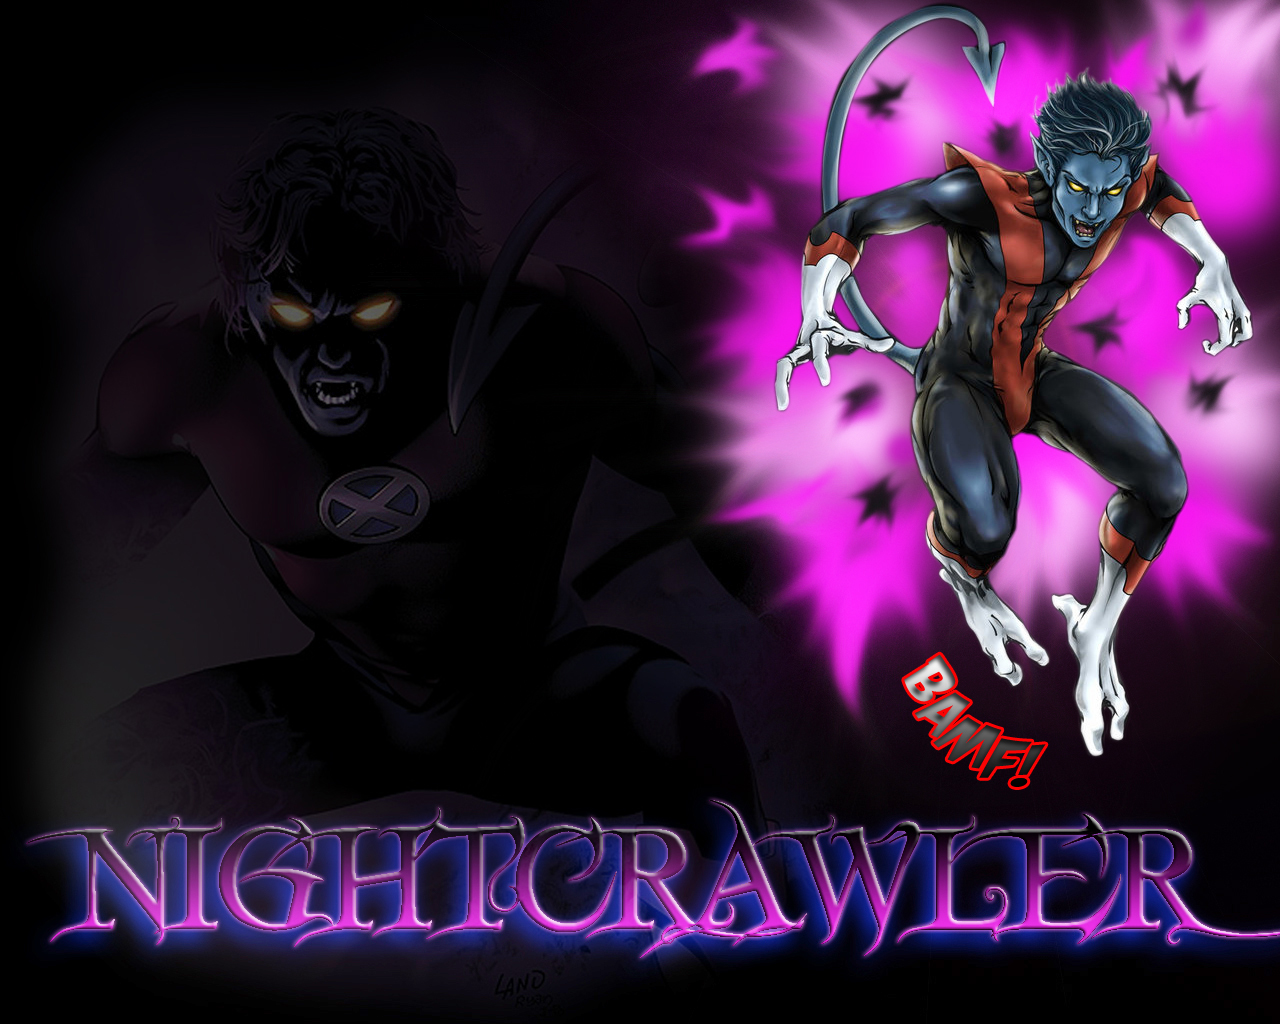 Nightcrawler slowed reverb